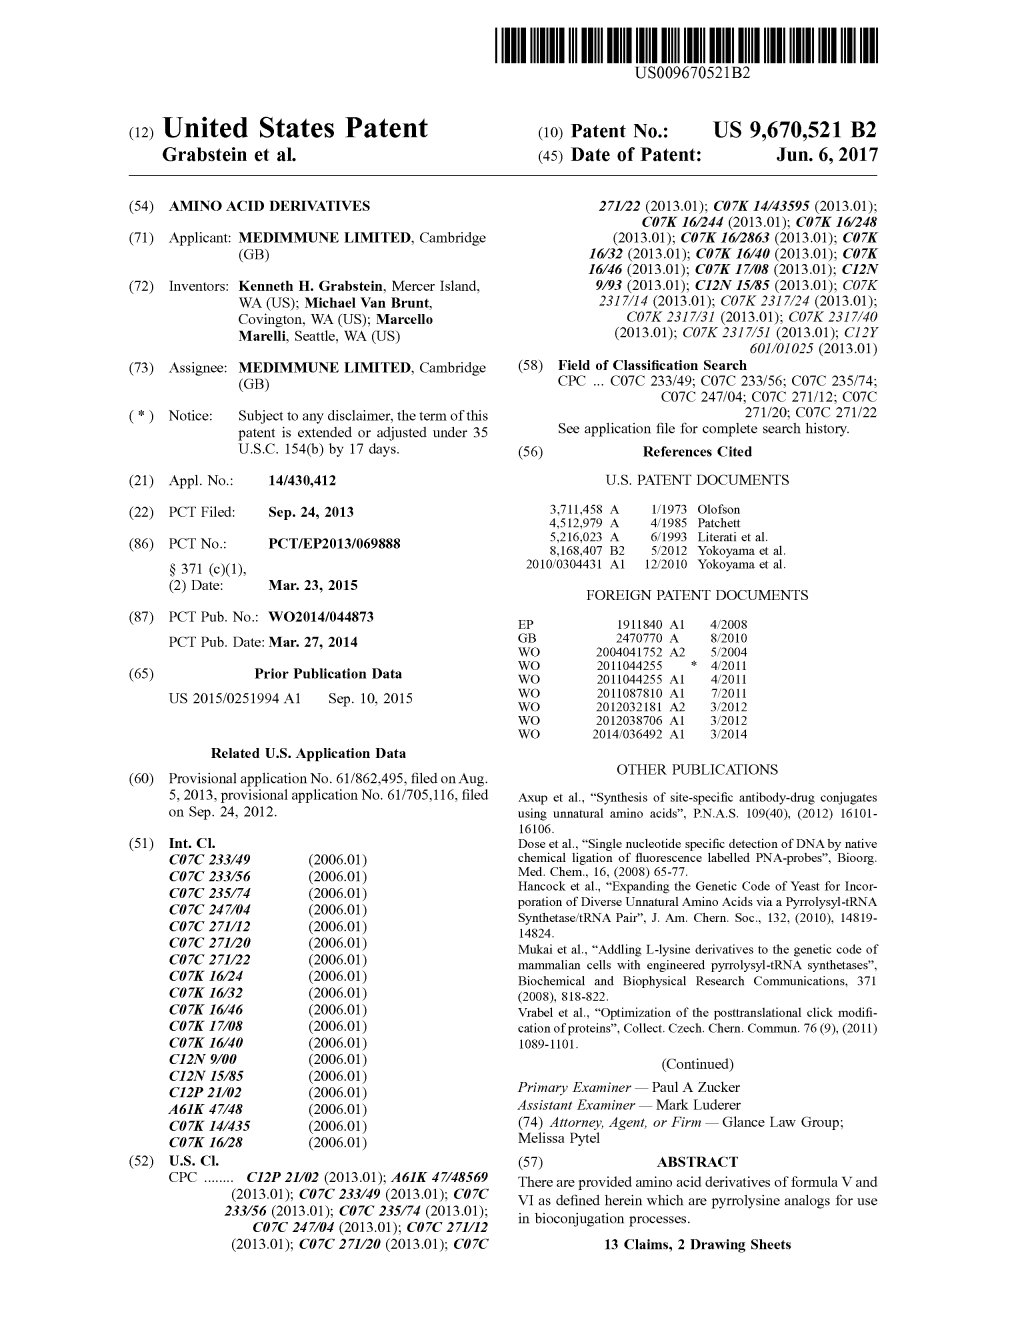 (12) United States Patent (10) Patent No.: US 9,670,521 B2 Grabstein Et Al